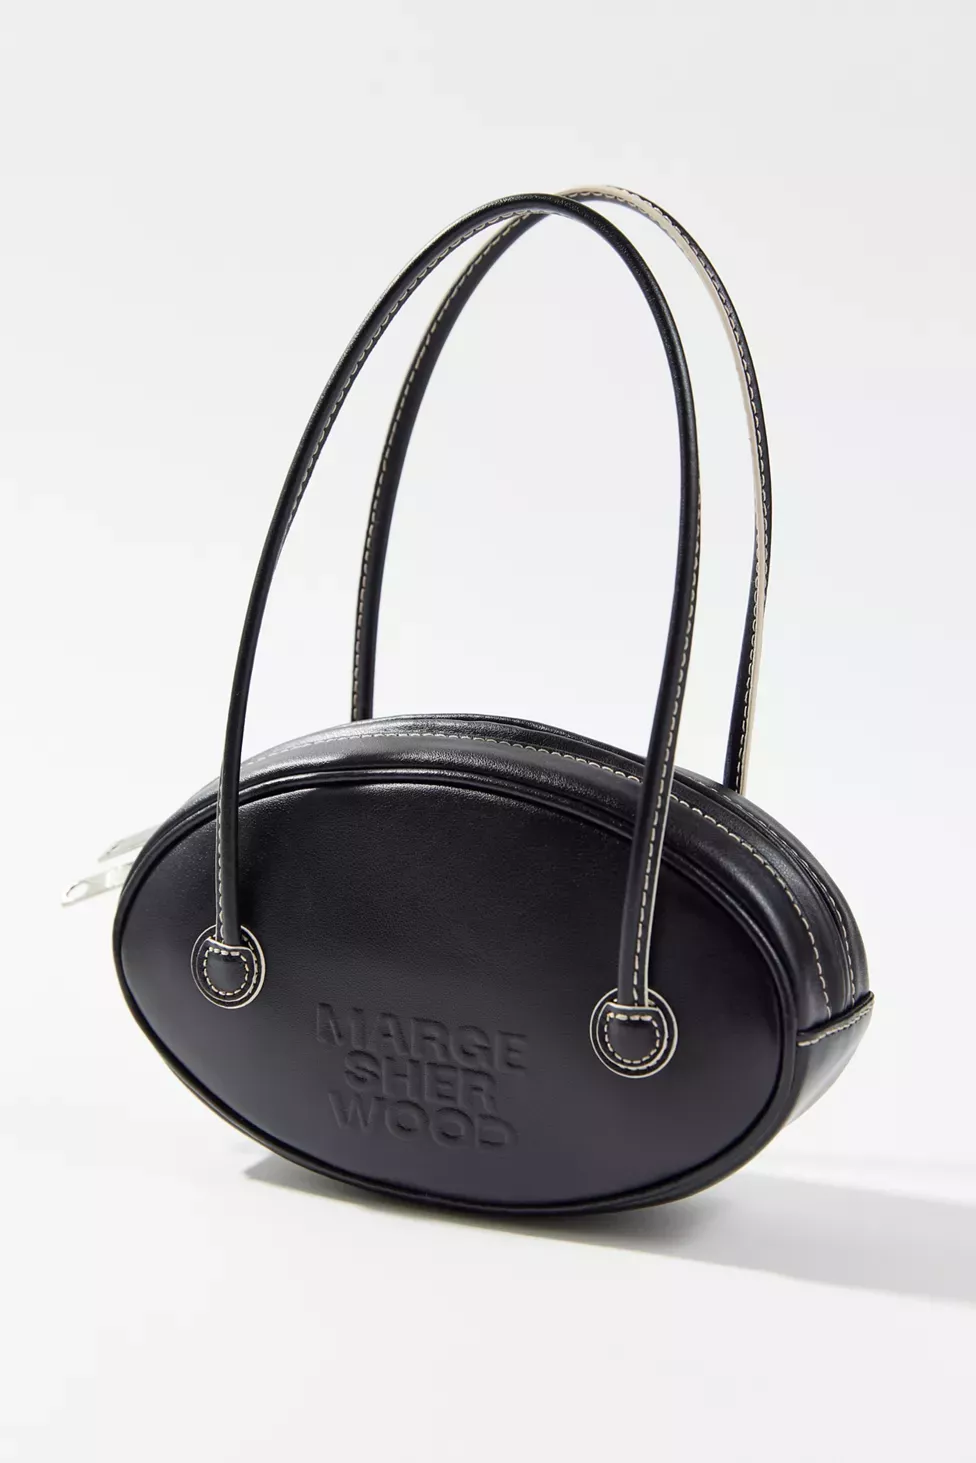 Marge Sherwood Piping Shoulder Bag curated on LTK